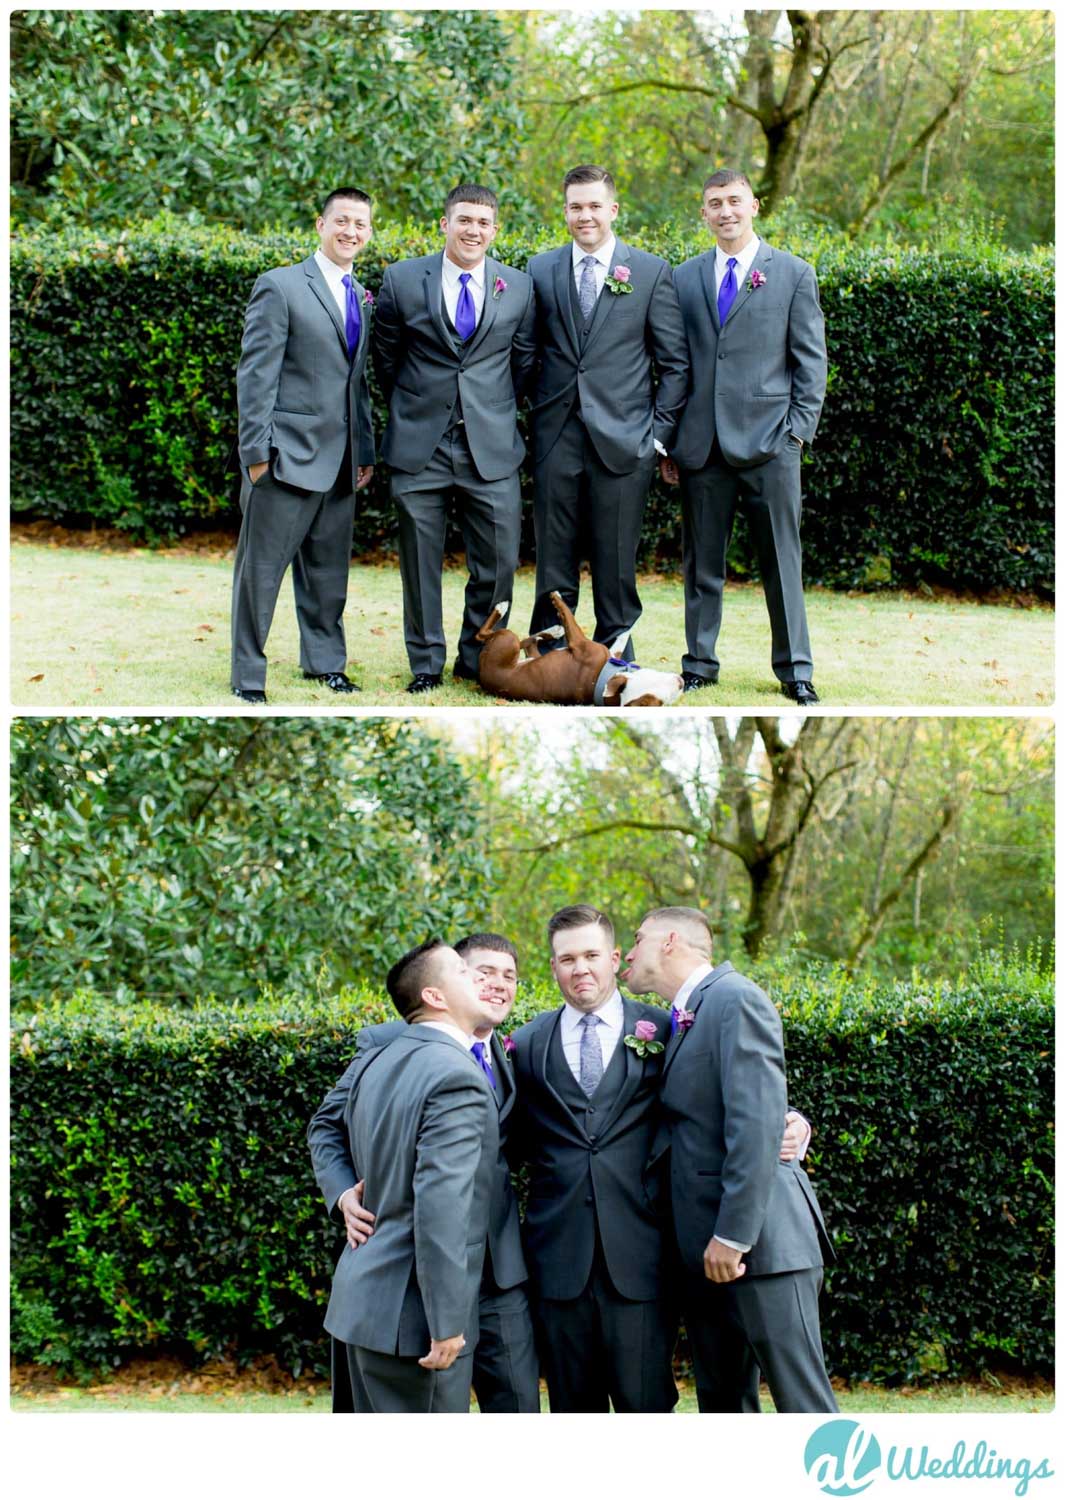 Suit,grey,purple,wedding,wedding party,